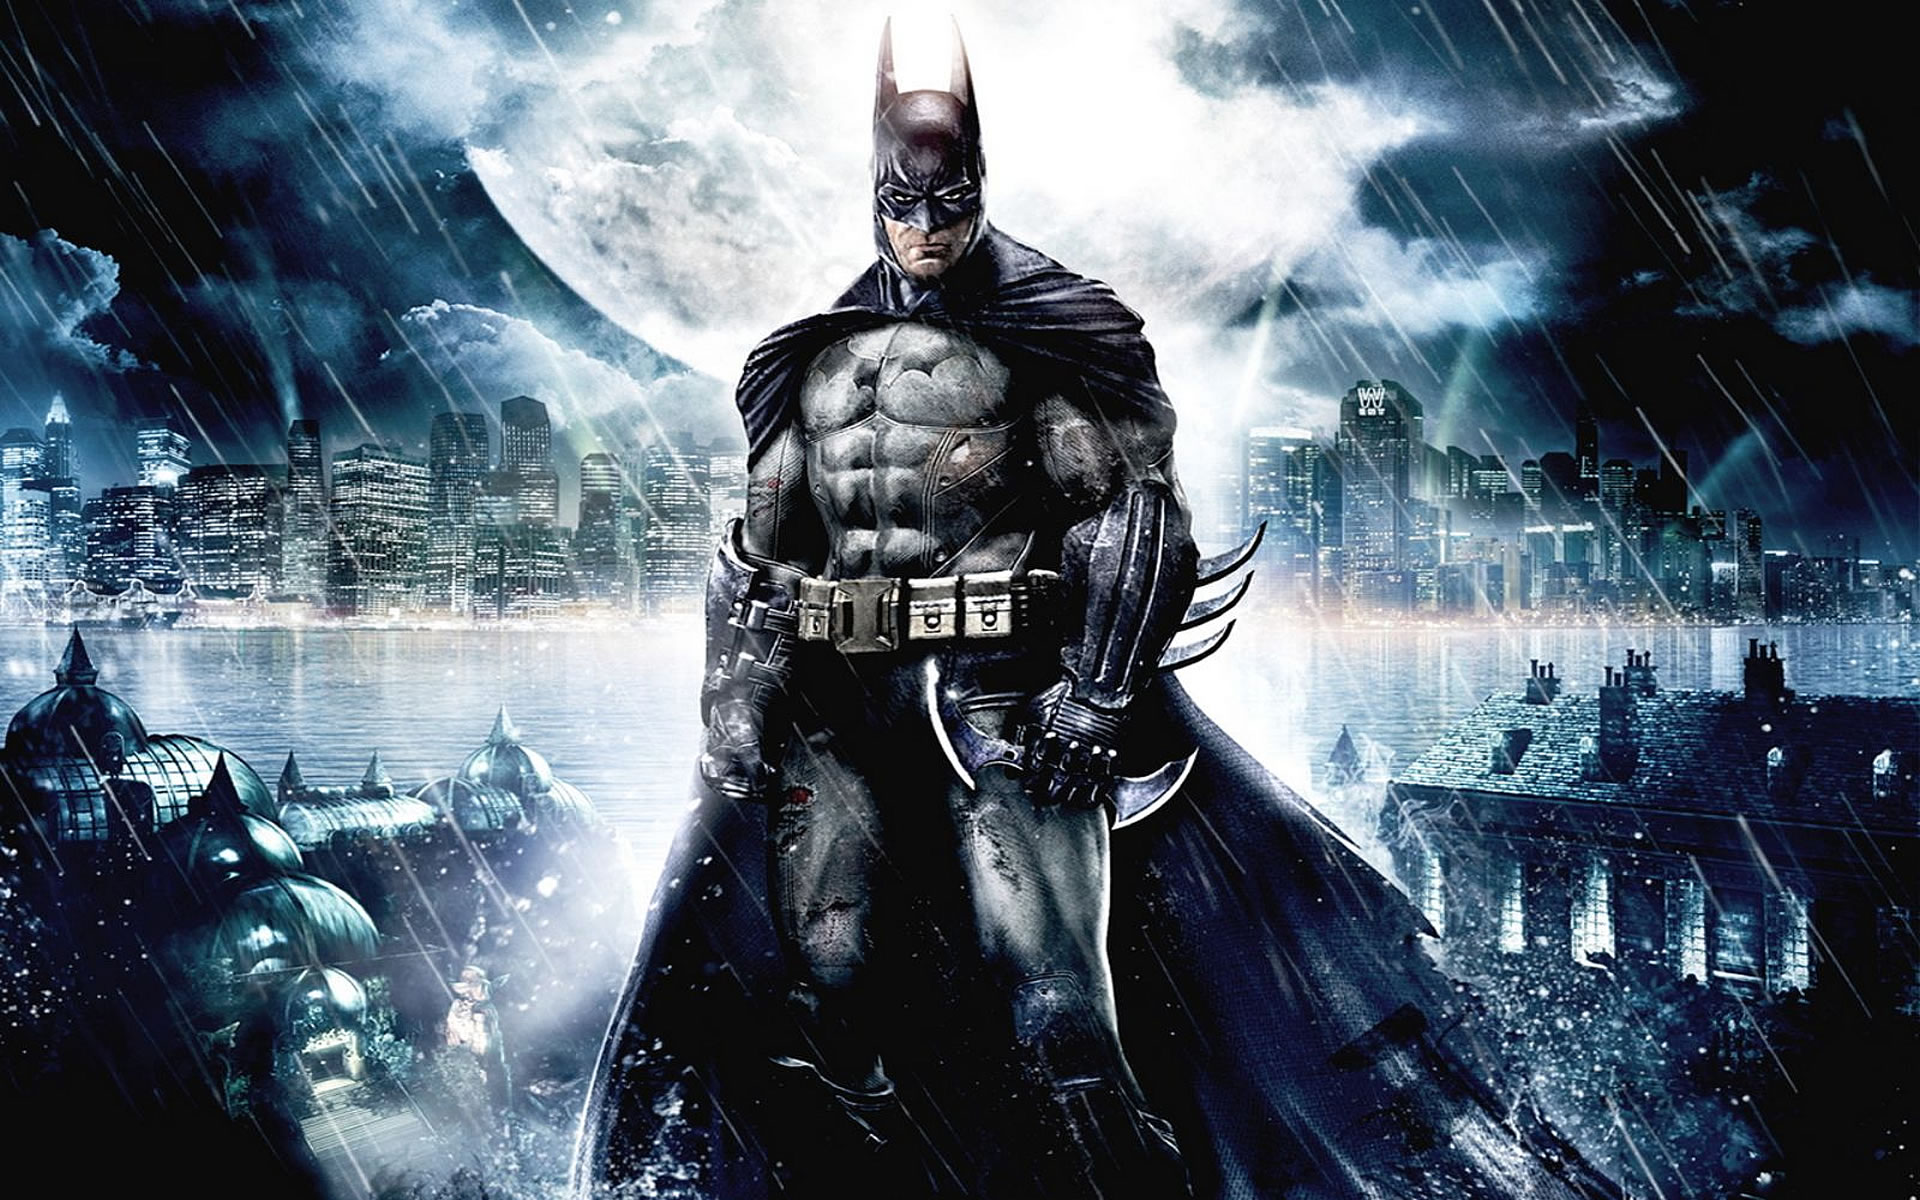 Batman Standing With Moon In Background - Batman Arkham Asylum Wallpaper